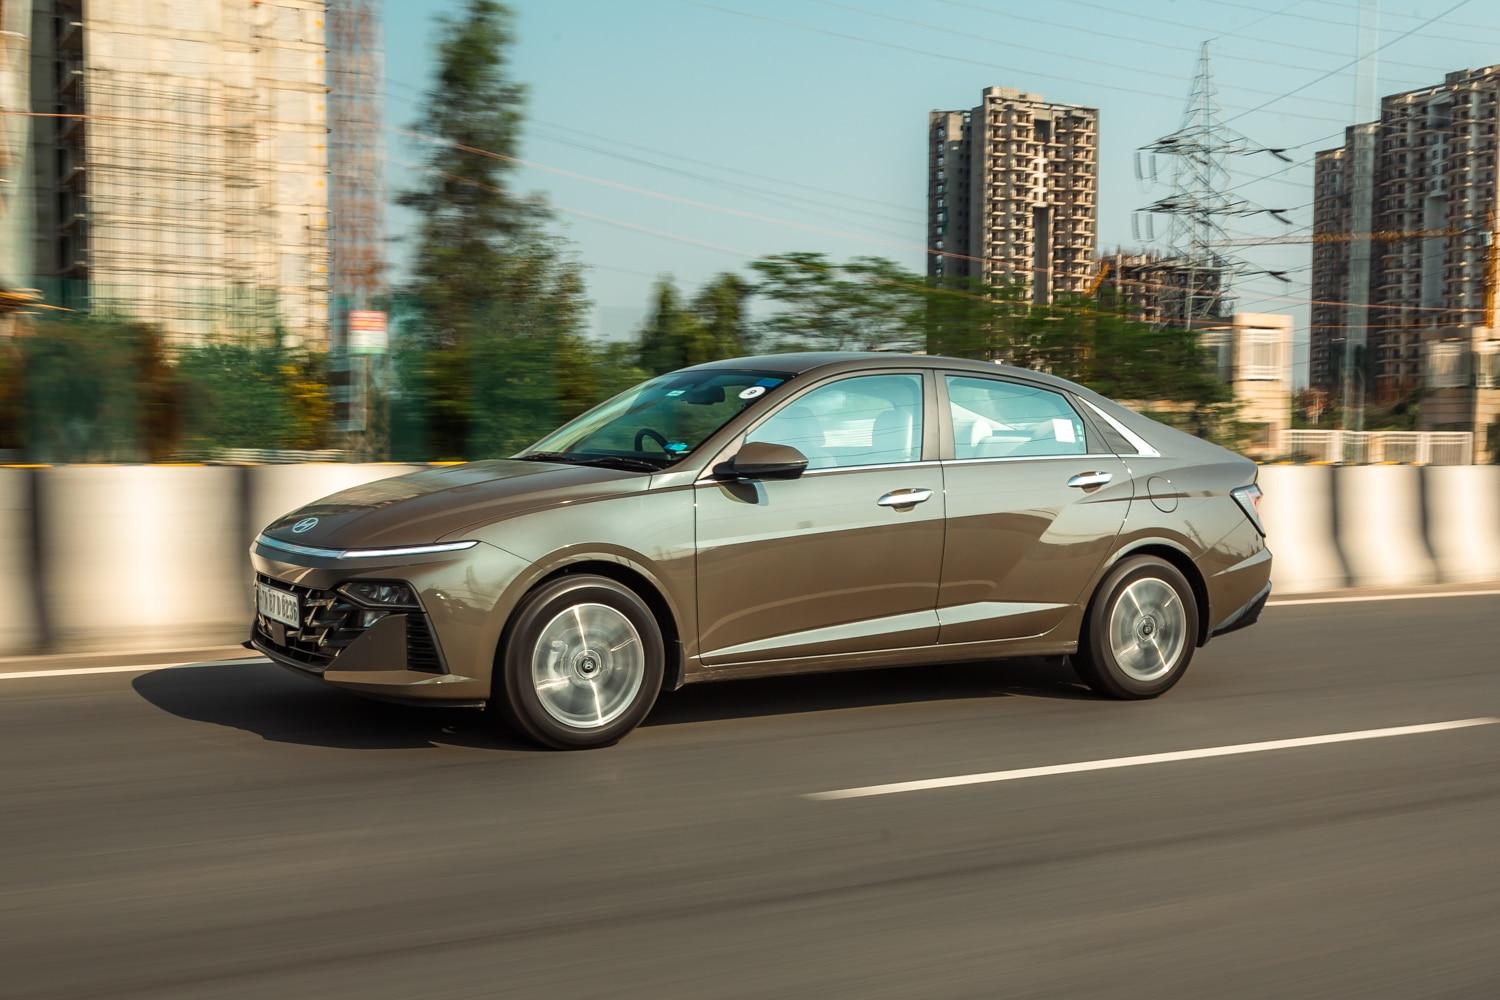 Hyundai Verna: First Drive Review